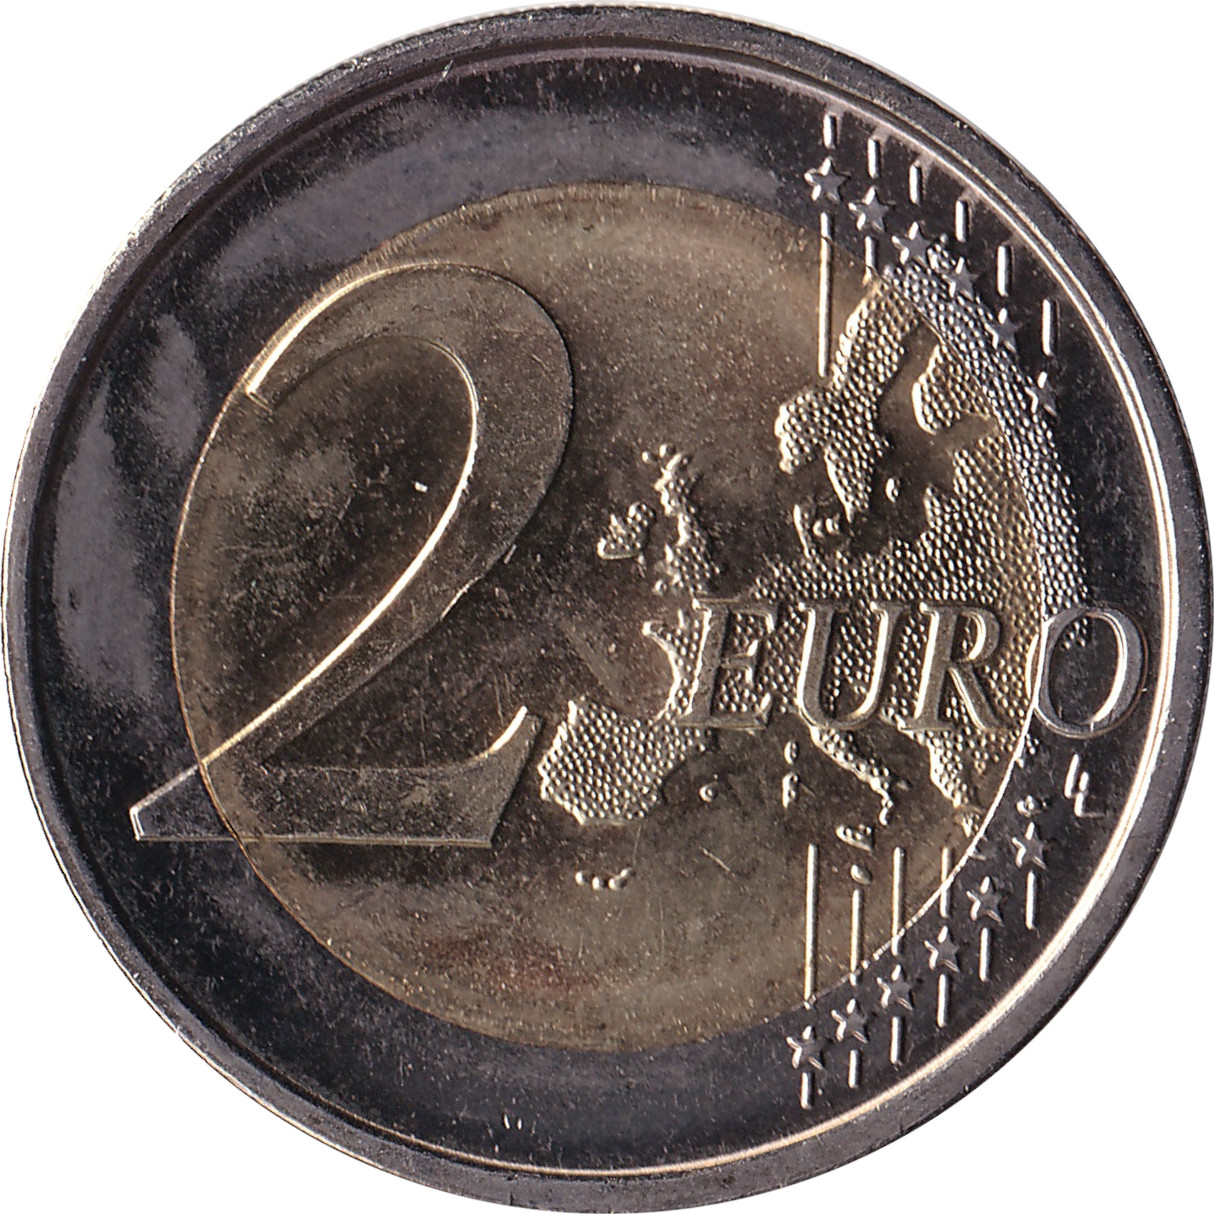 2 euro - Riga